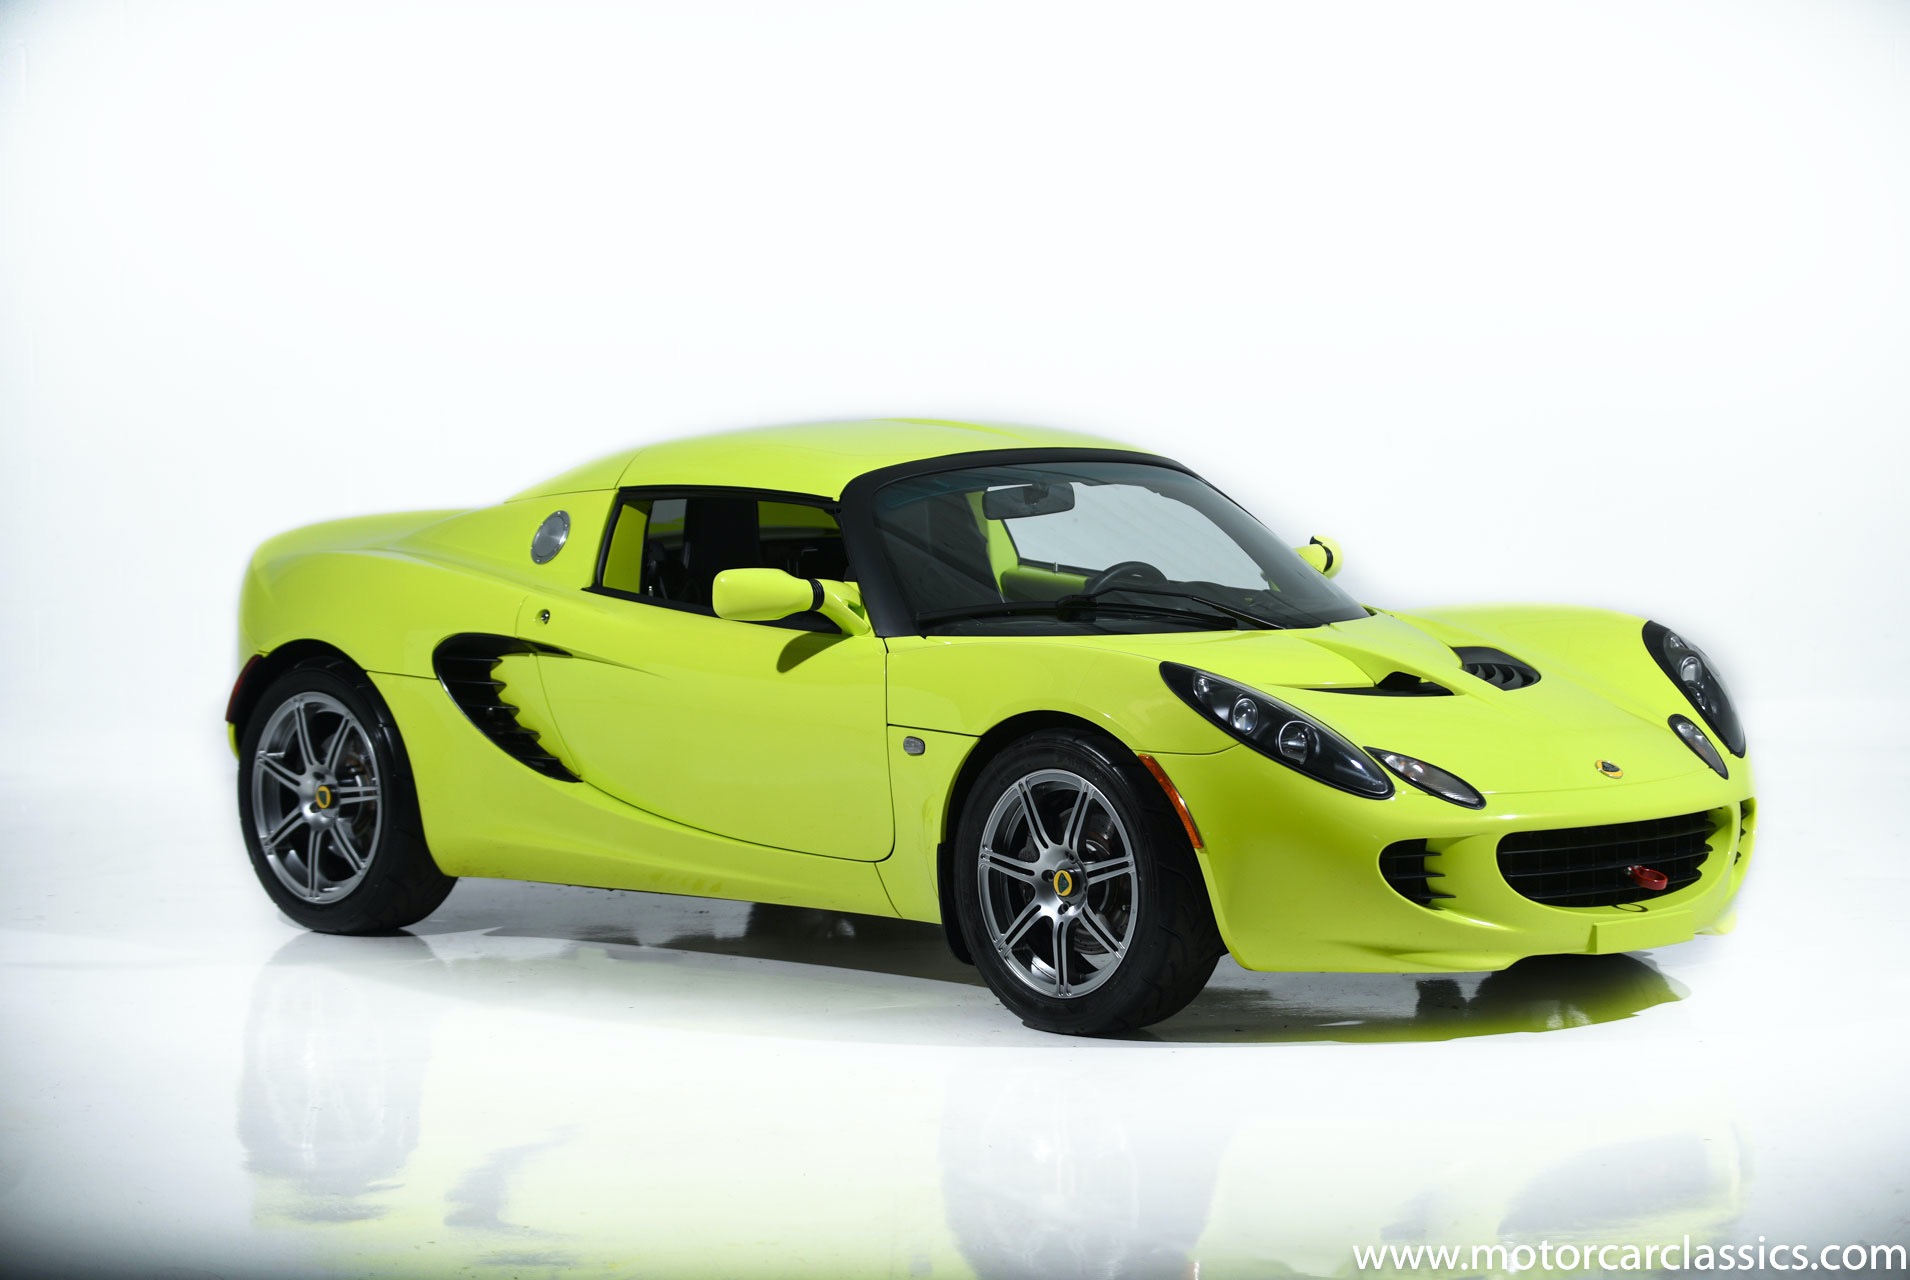 Used 2007 Lotus Elise For Sale ($39,900) | Motorcar Classics Stock #1550